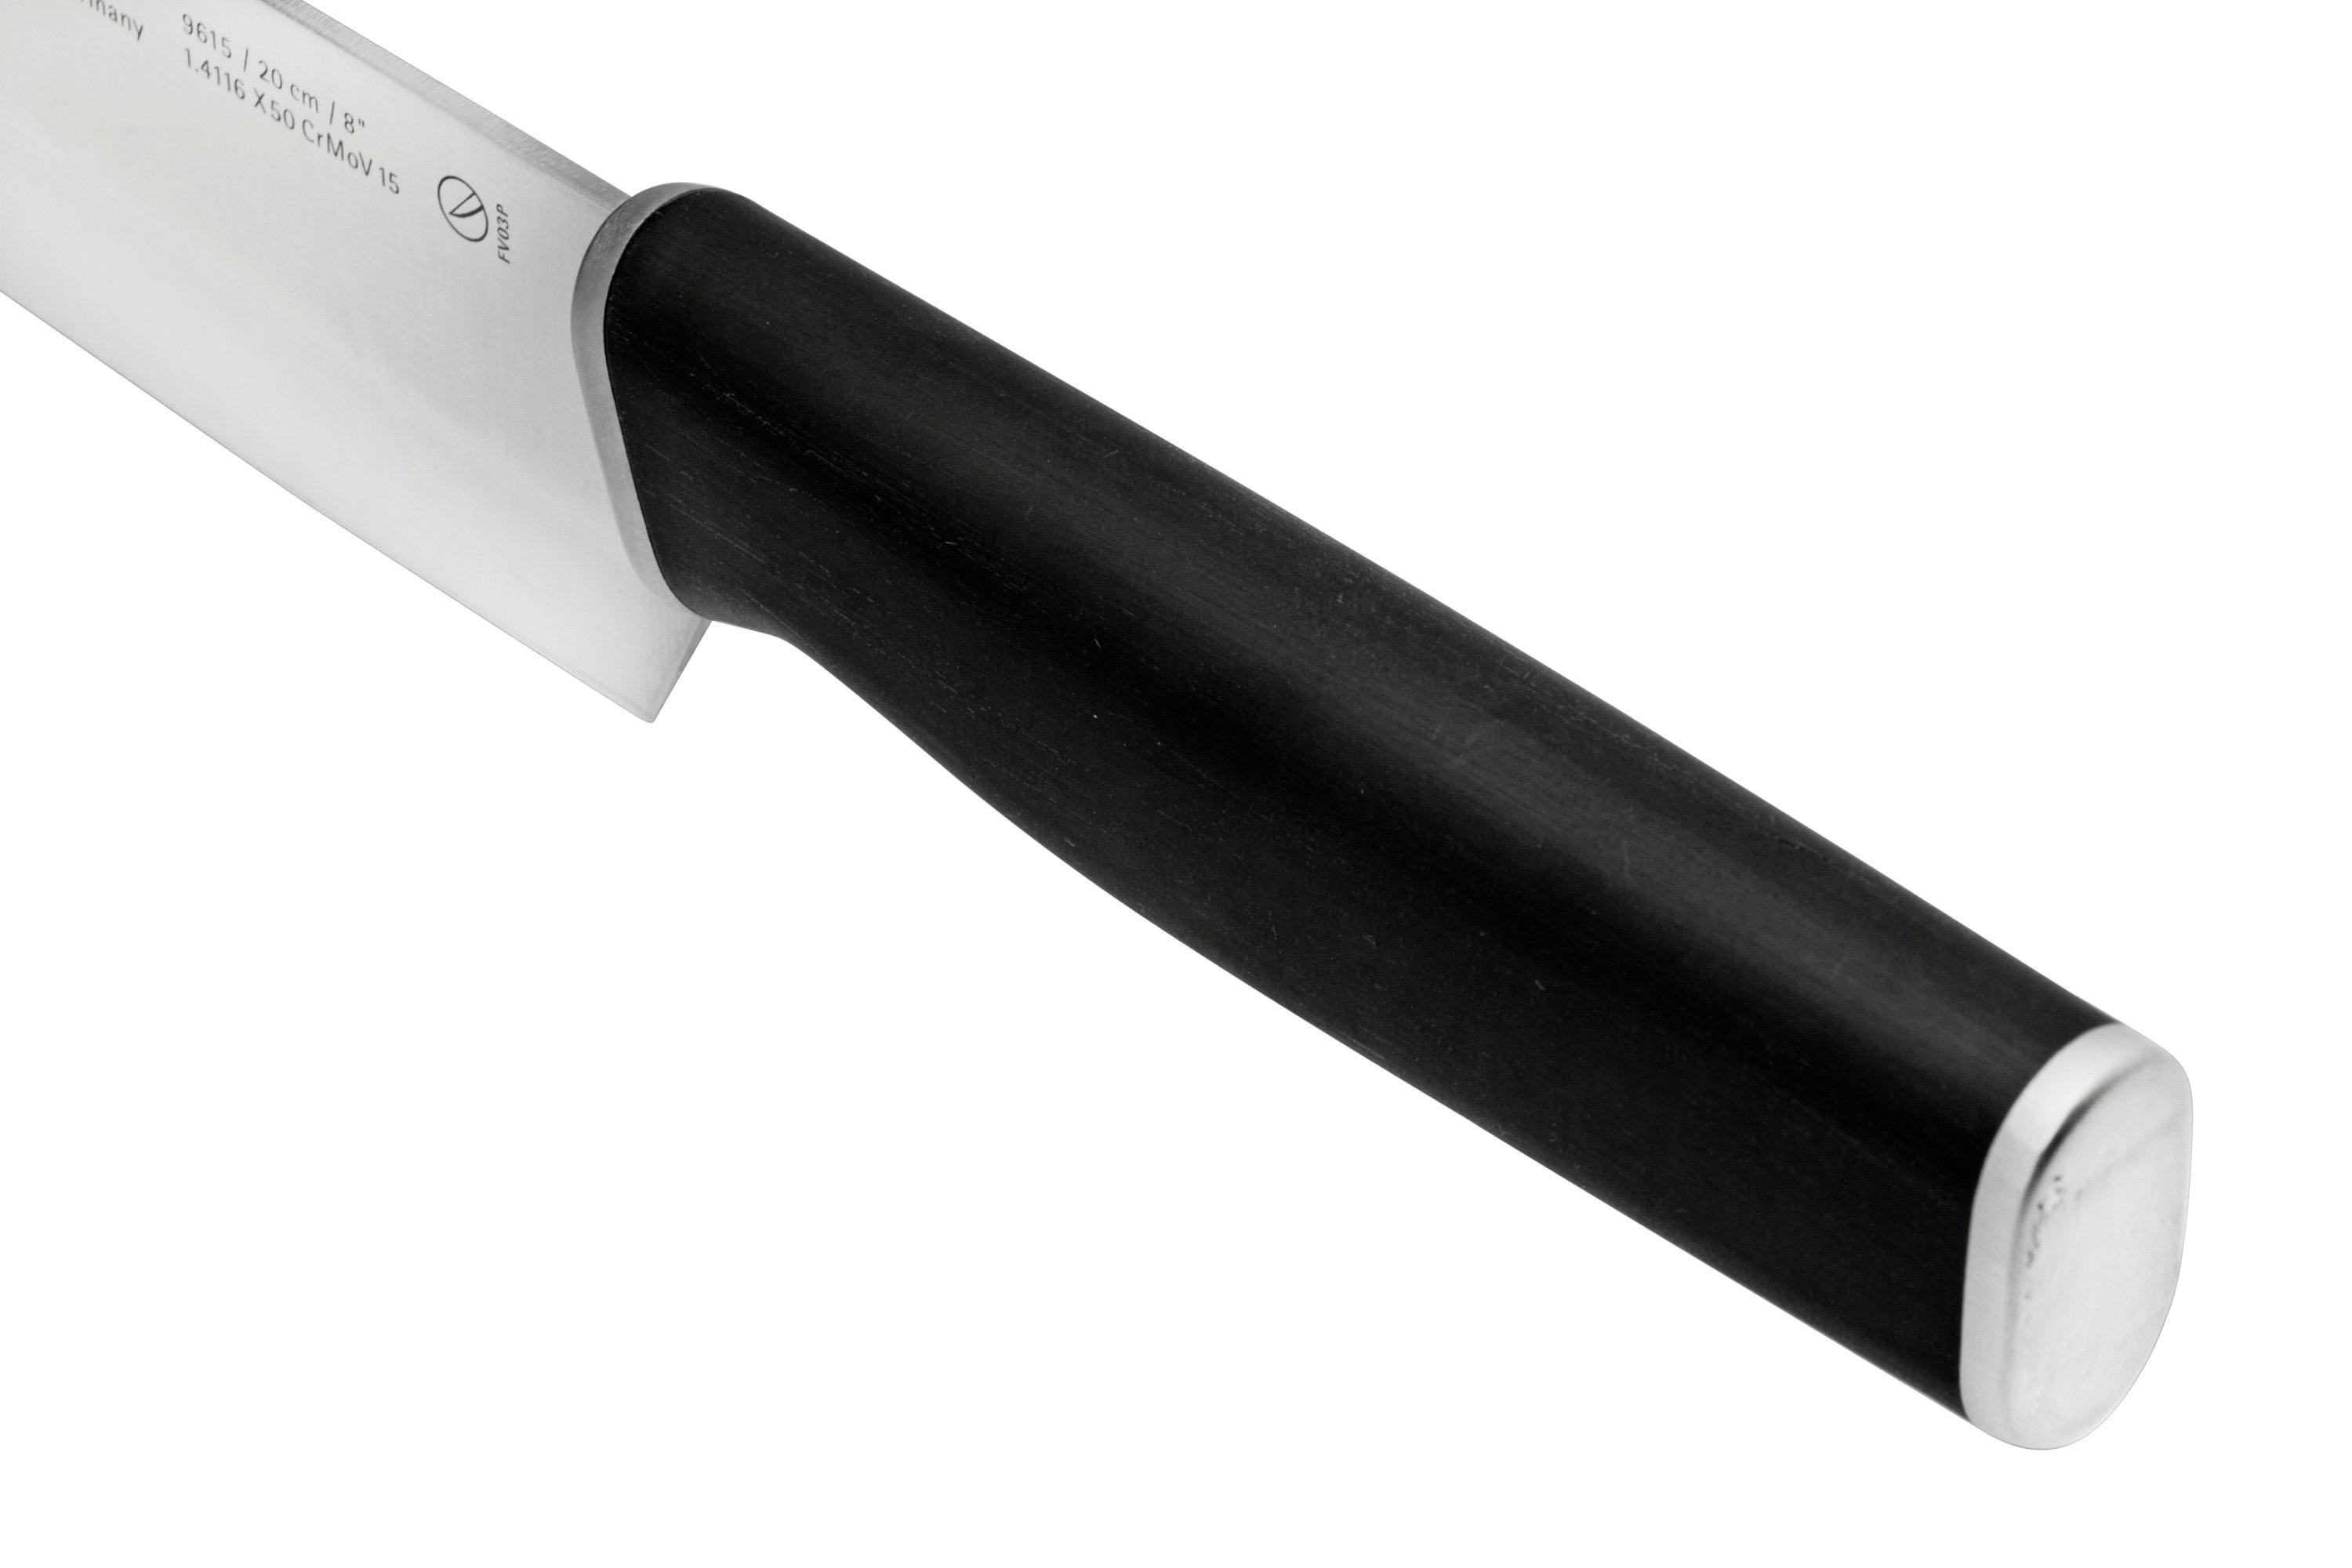 WMF Kineo 1882219992 Asian 6-piece knife set  Advantageously shopping at